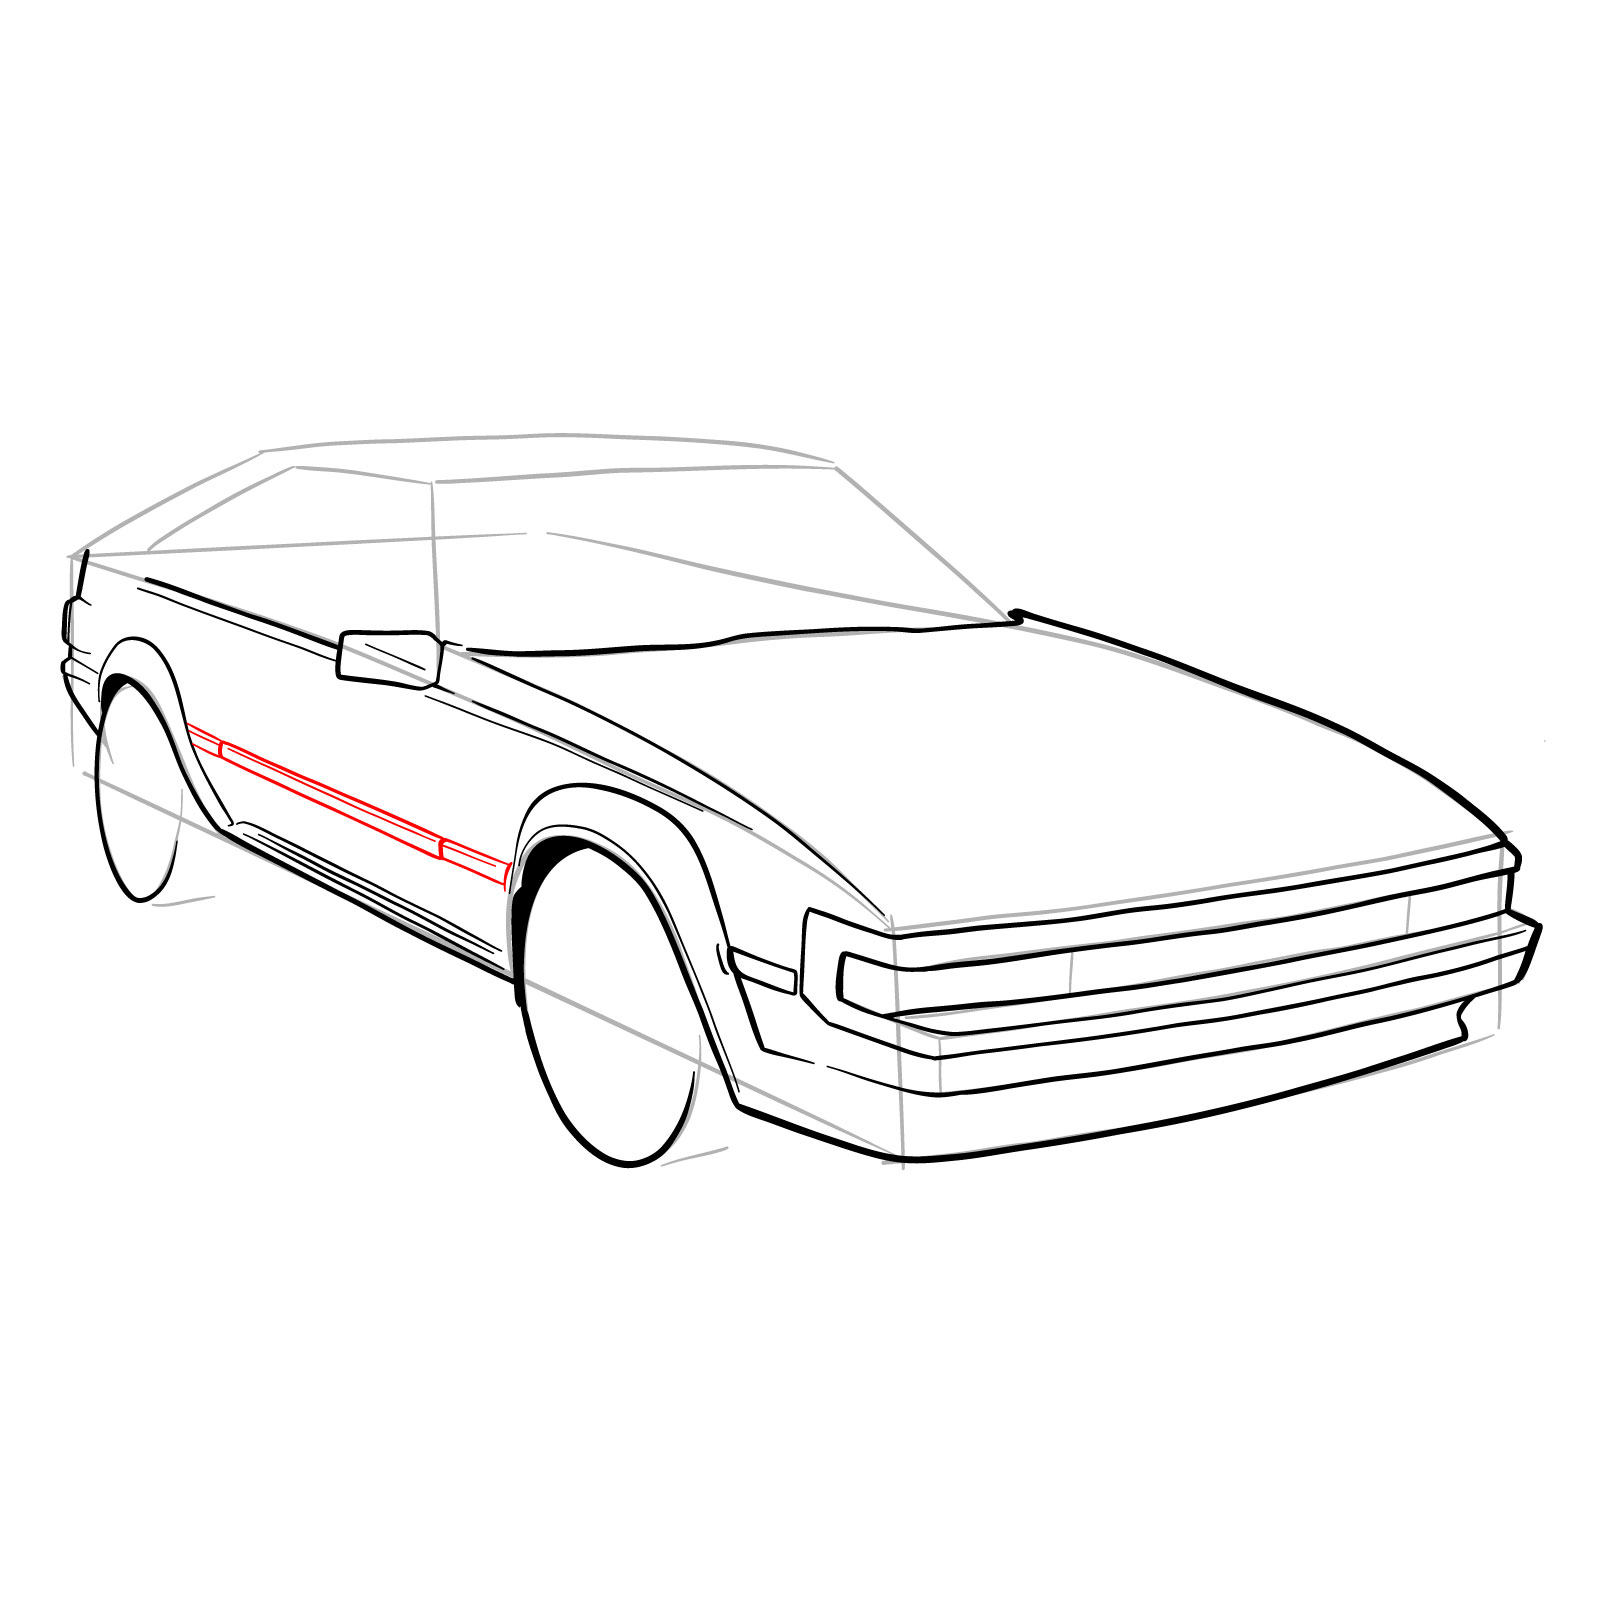 How to draw a 1985 Toyota Celica Supra P Type MK 2 - step 20